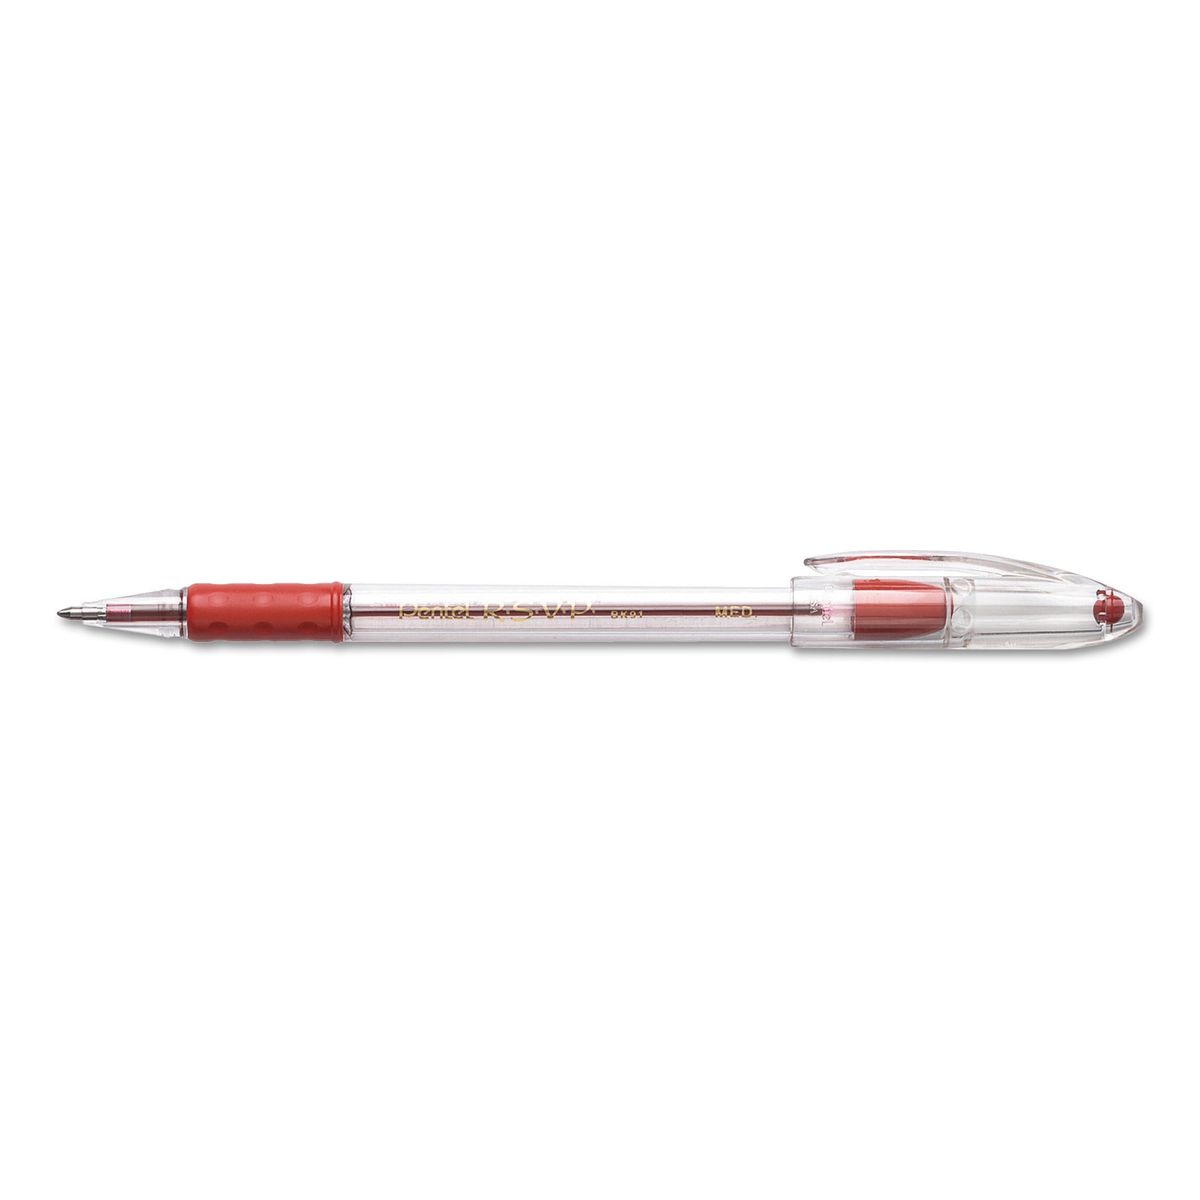   Pentel RSVP スティックペン ミディアムペン先 - 詰め替え用 - レッド - 透明軸 - 1ダース  | Pentel RSVP Stick Pen Medium Pen Point - Refillable - Red - Clear Barrel - 1 Dozen